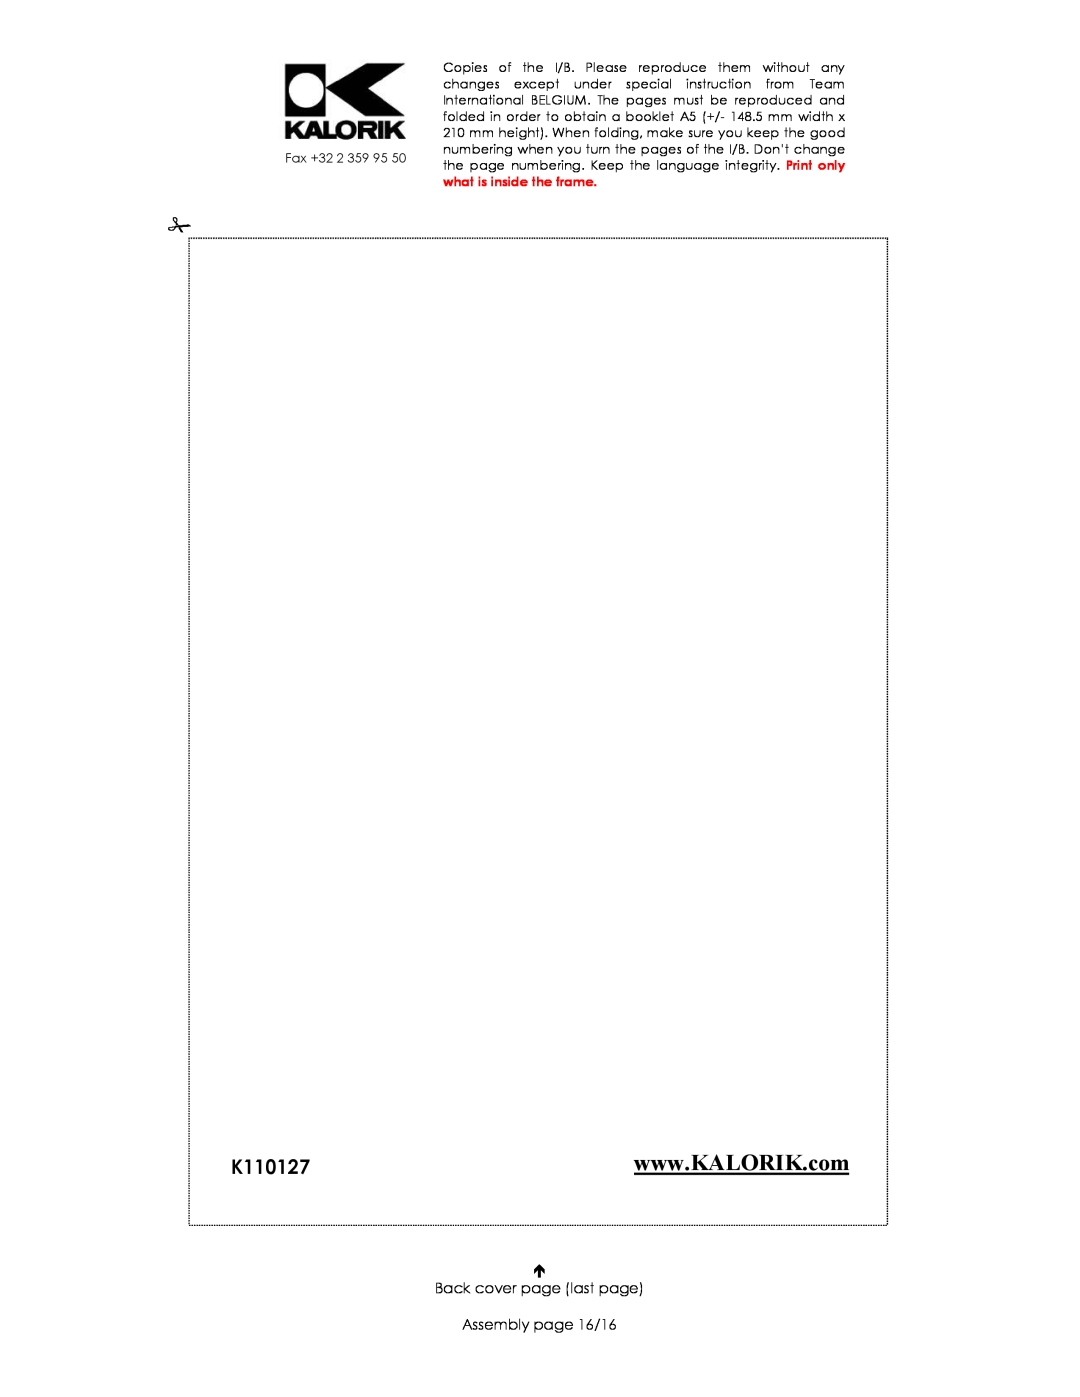 Kalorik USK GR 28215 manual Back cover page last page Assembly page 16/16 